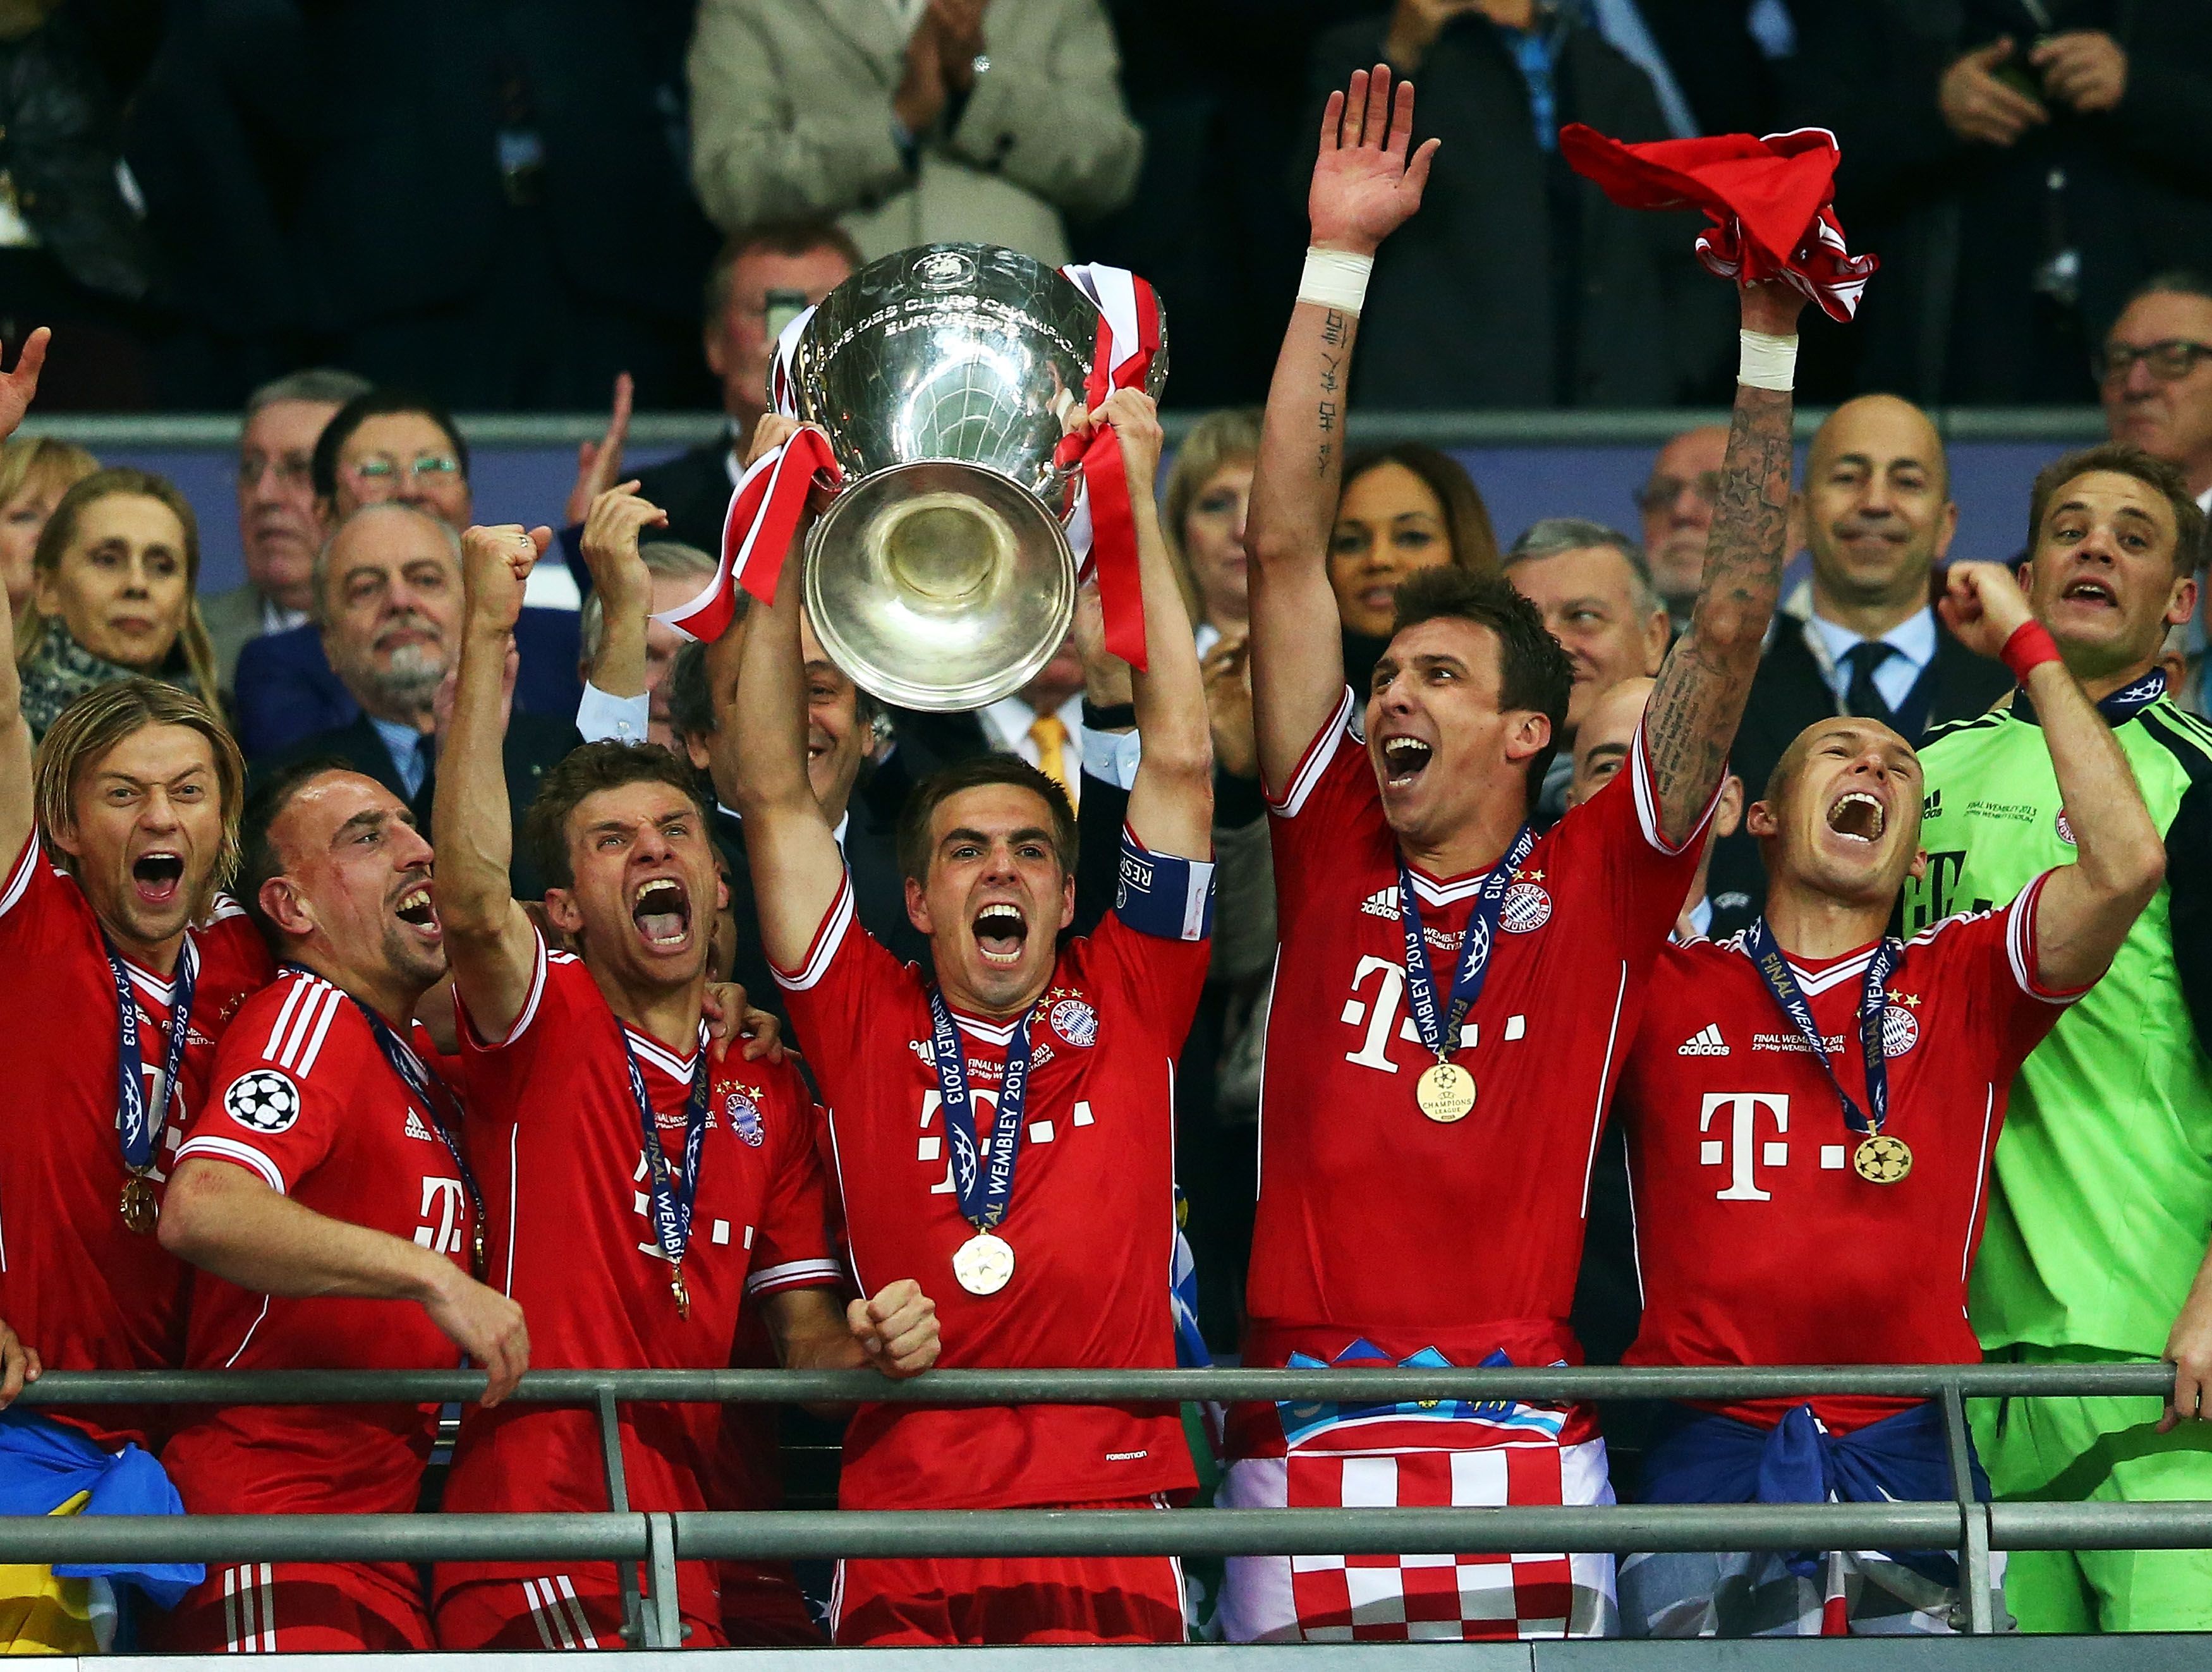 Bayern Munich dominated in 2013